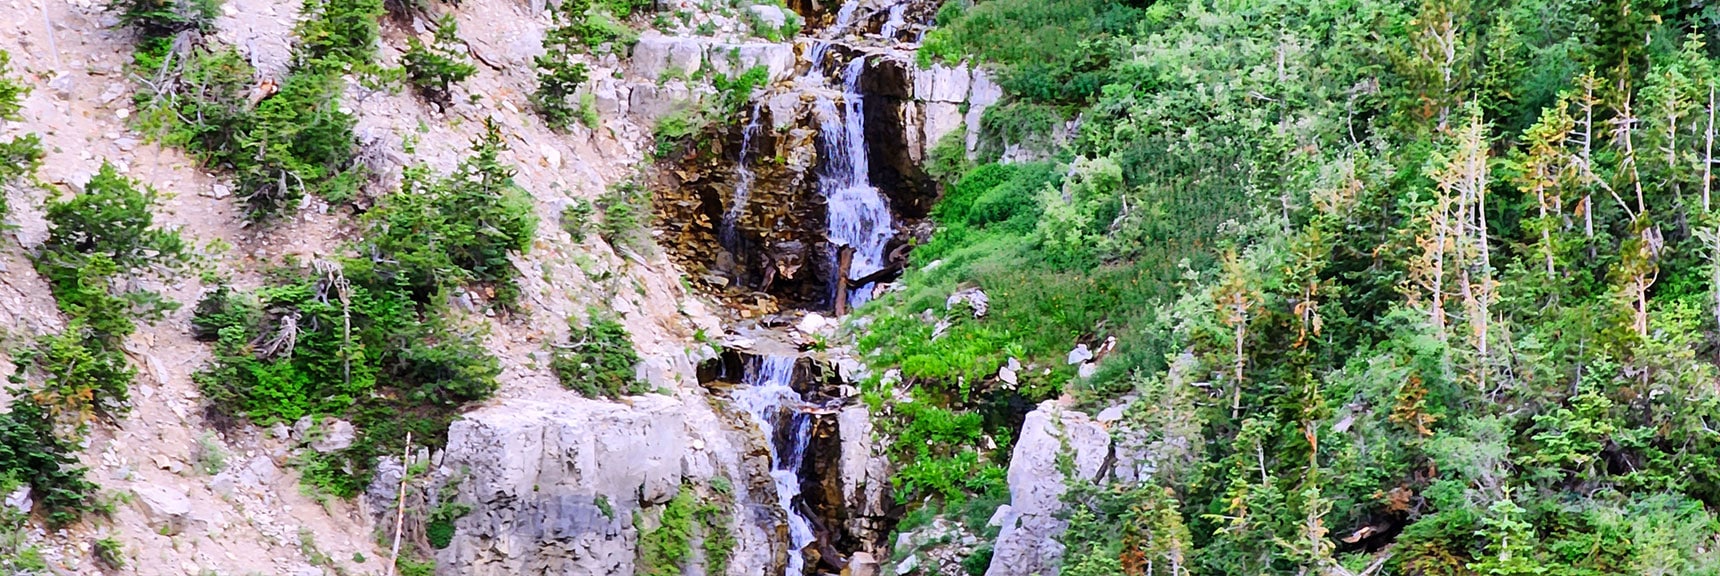 Closer, the Plunging Waterfalls are Huge! | Fletcher Canyon Trailhead to Harris Mountain Summit to Griffith Peak Summit Circuit Adventure | Mt. Charleston Wilderness, Nevada